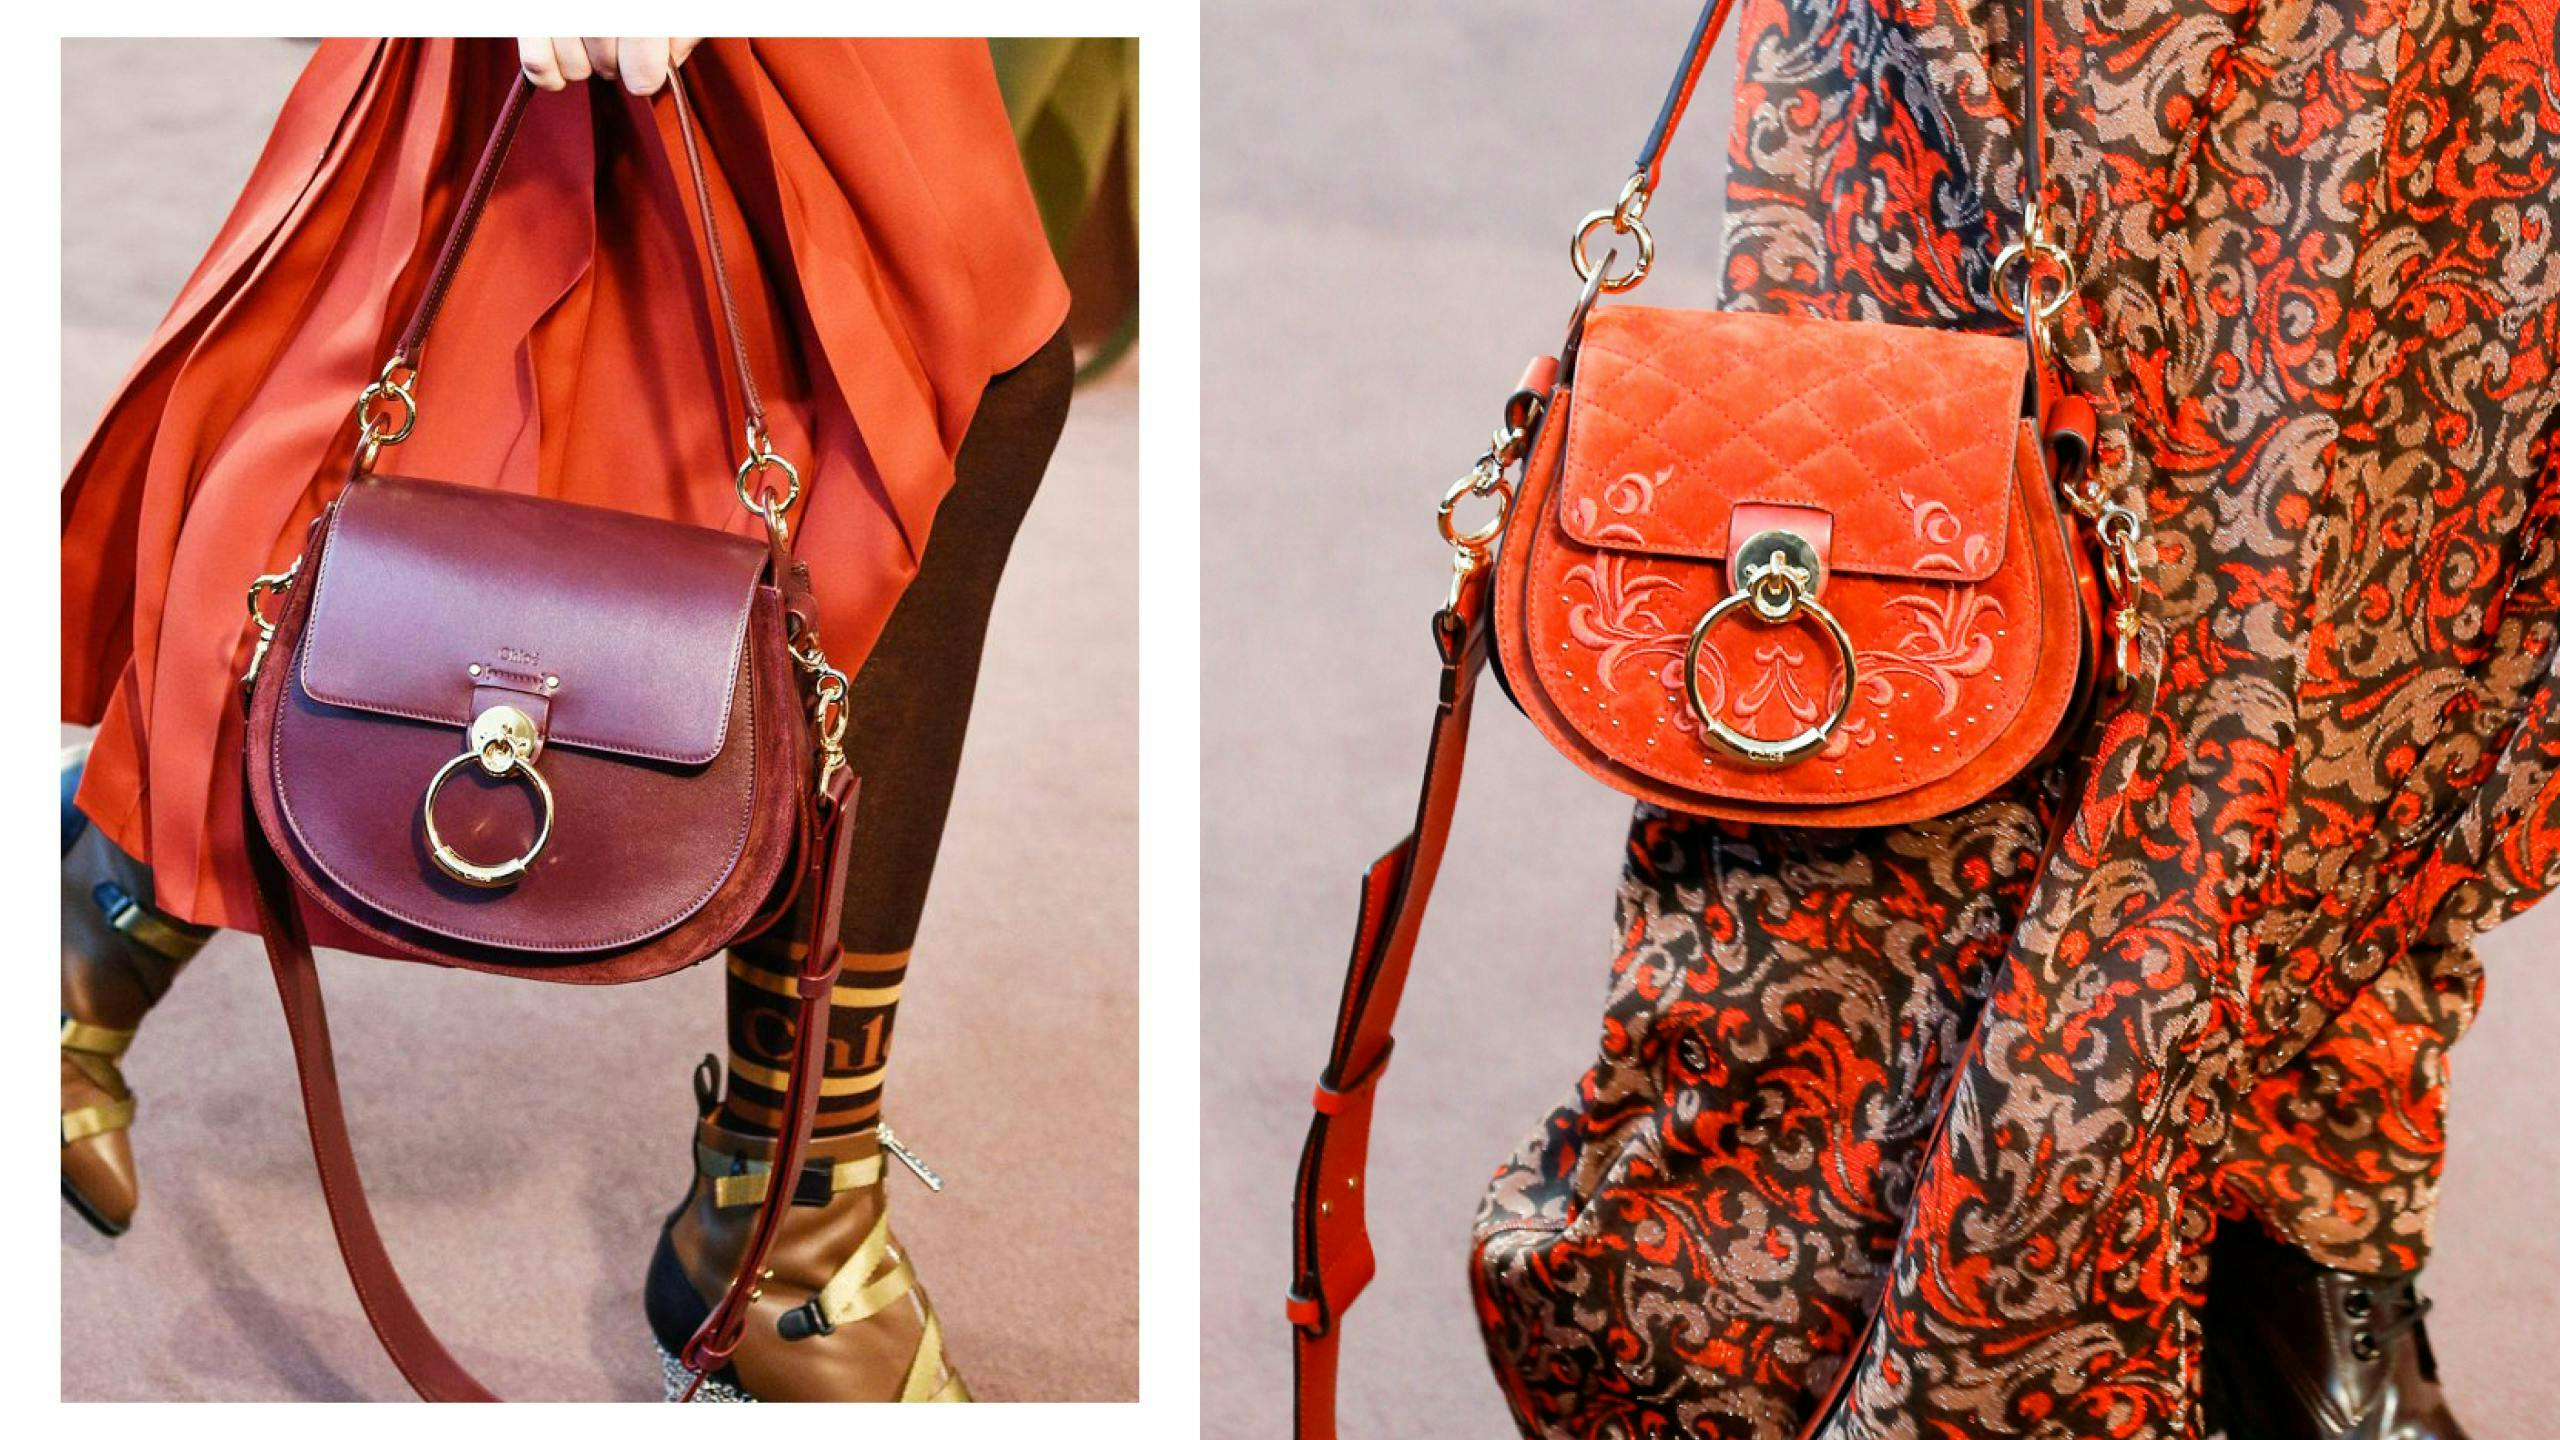 handbag bag accessories accessory purse clothing apparel